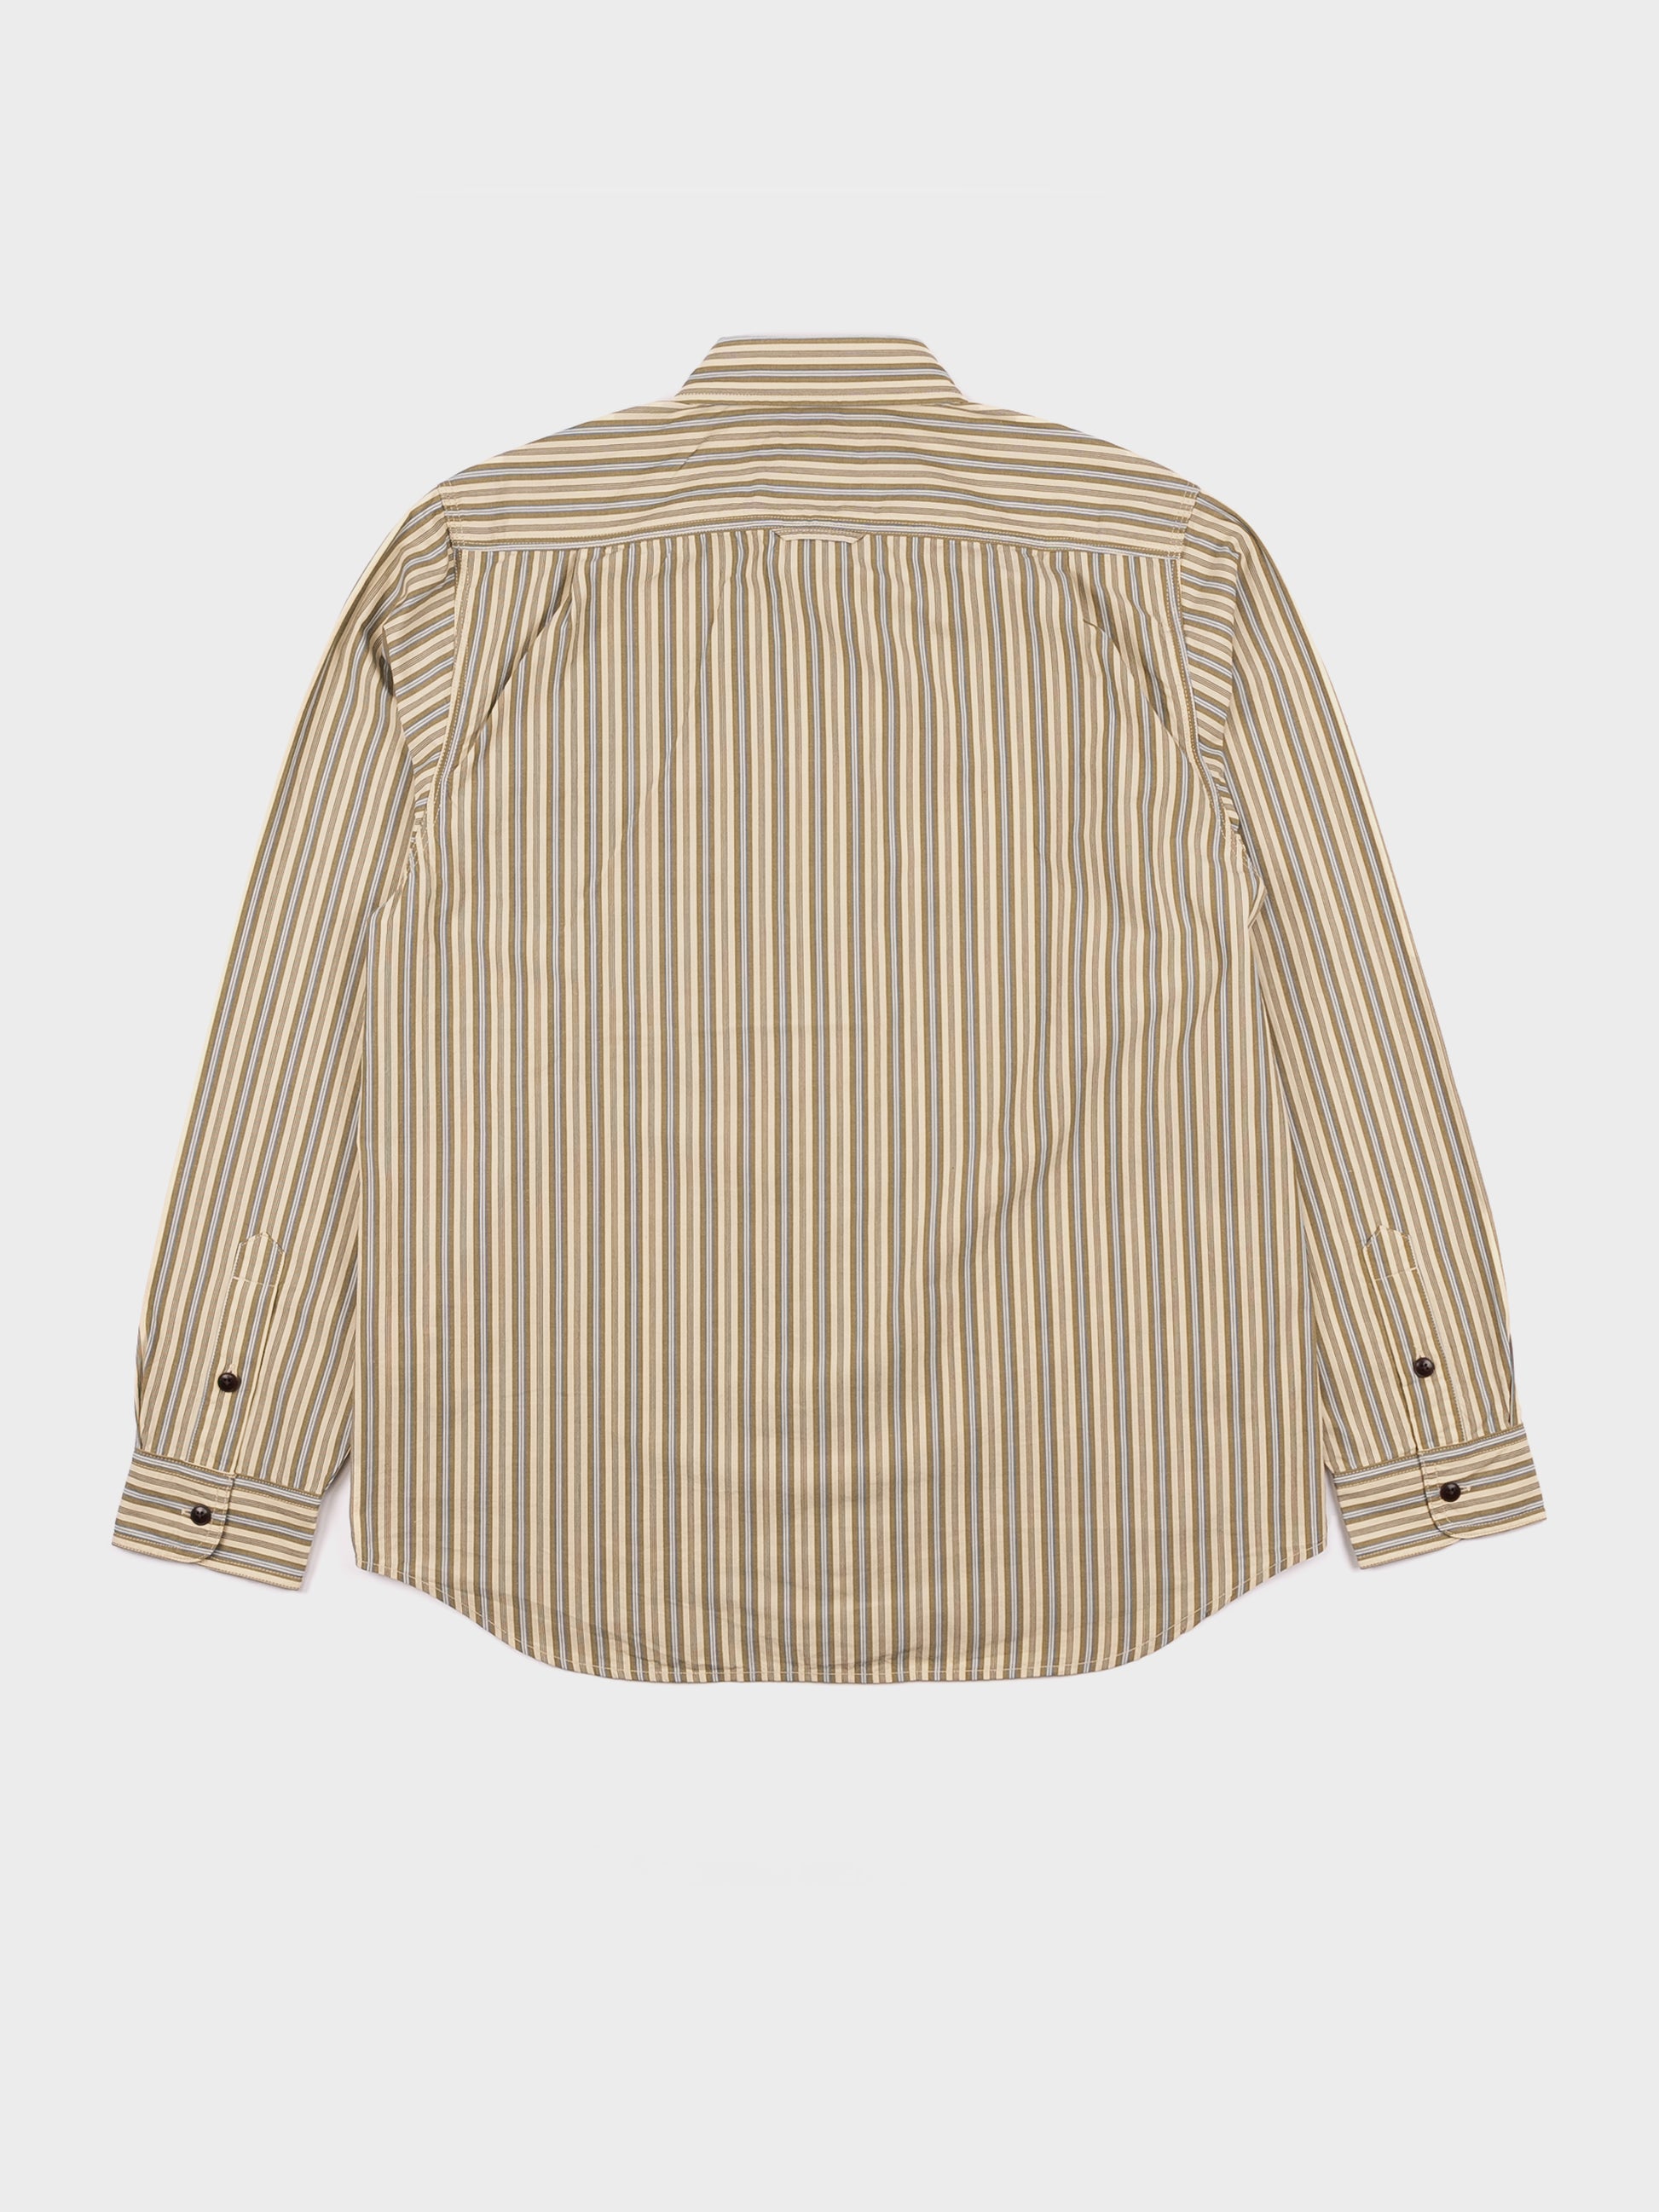 TOAST Otis Crinkle Stripe Shirt - Pulp/Bright Sky